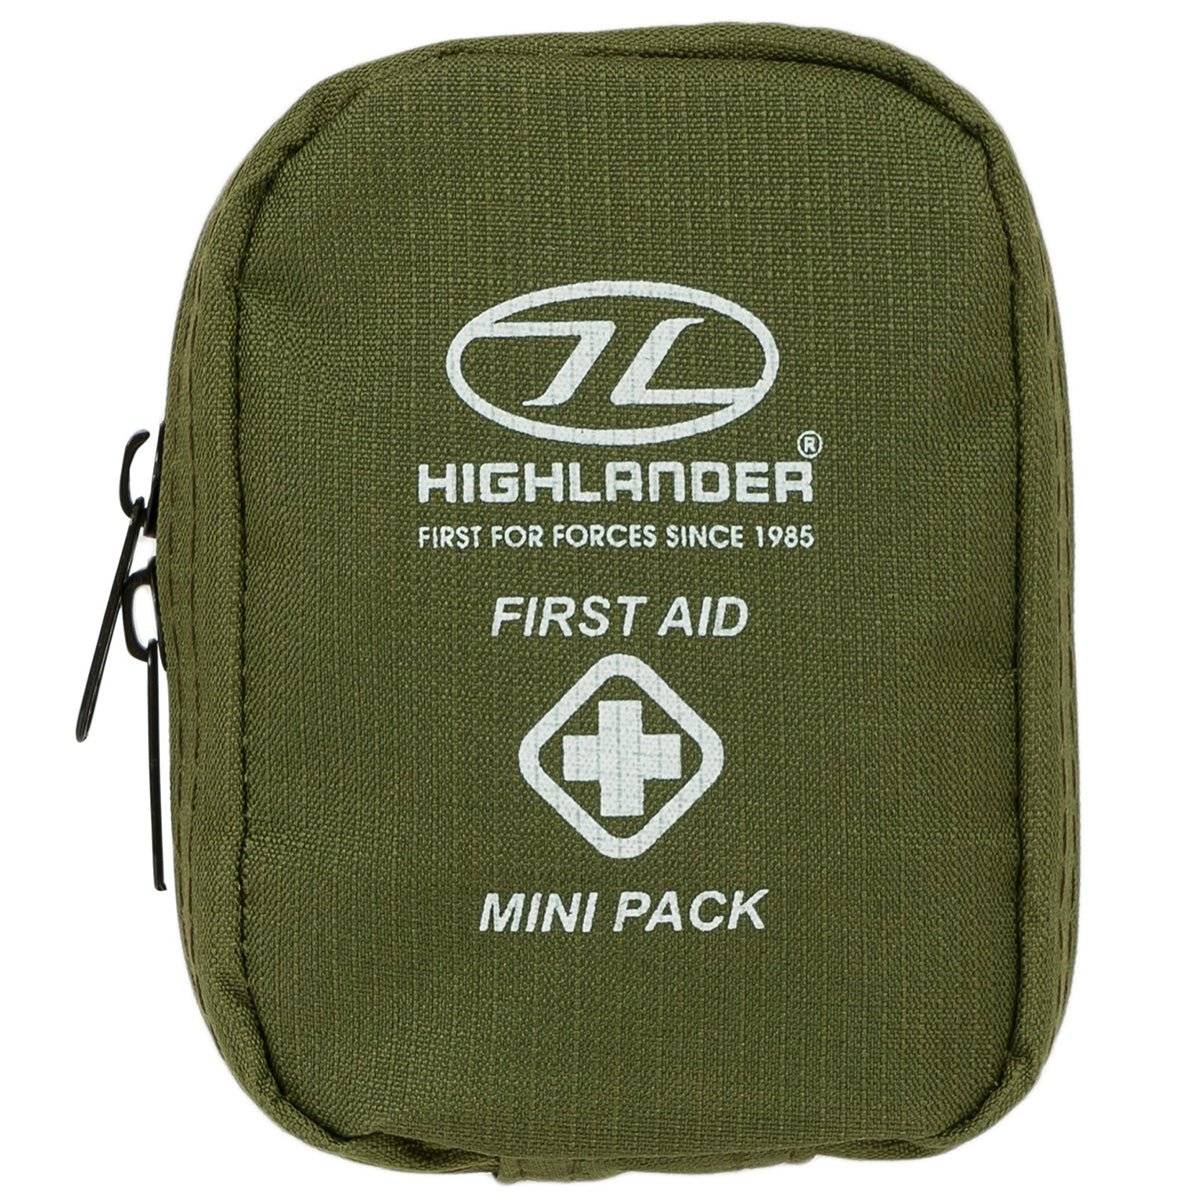 Highlander Military Mini First Aid Kit - John Bull Clothing